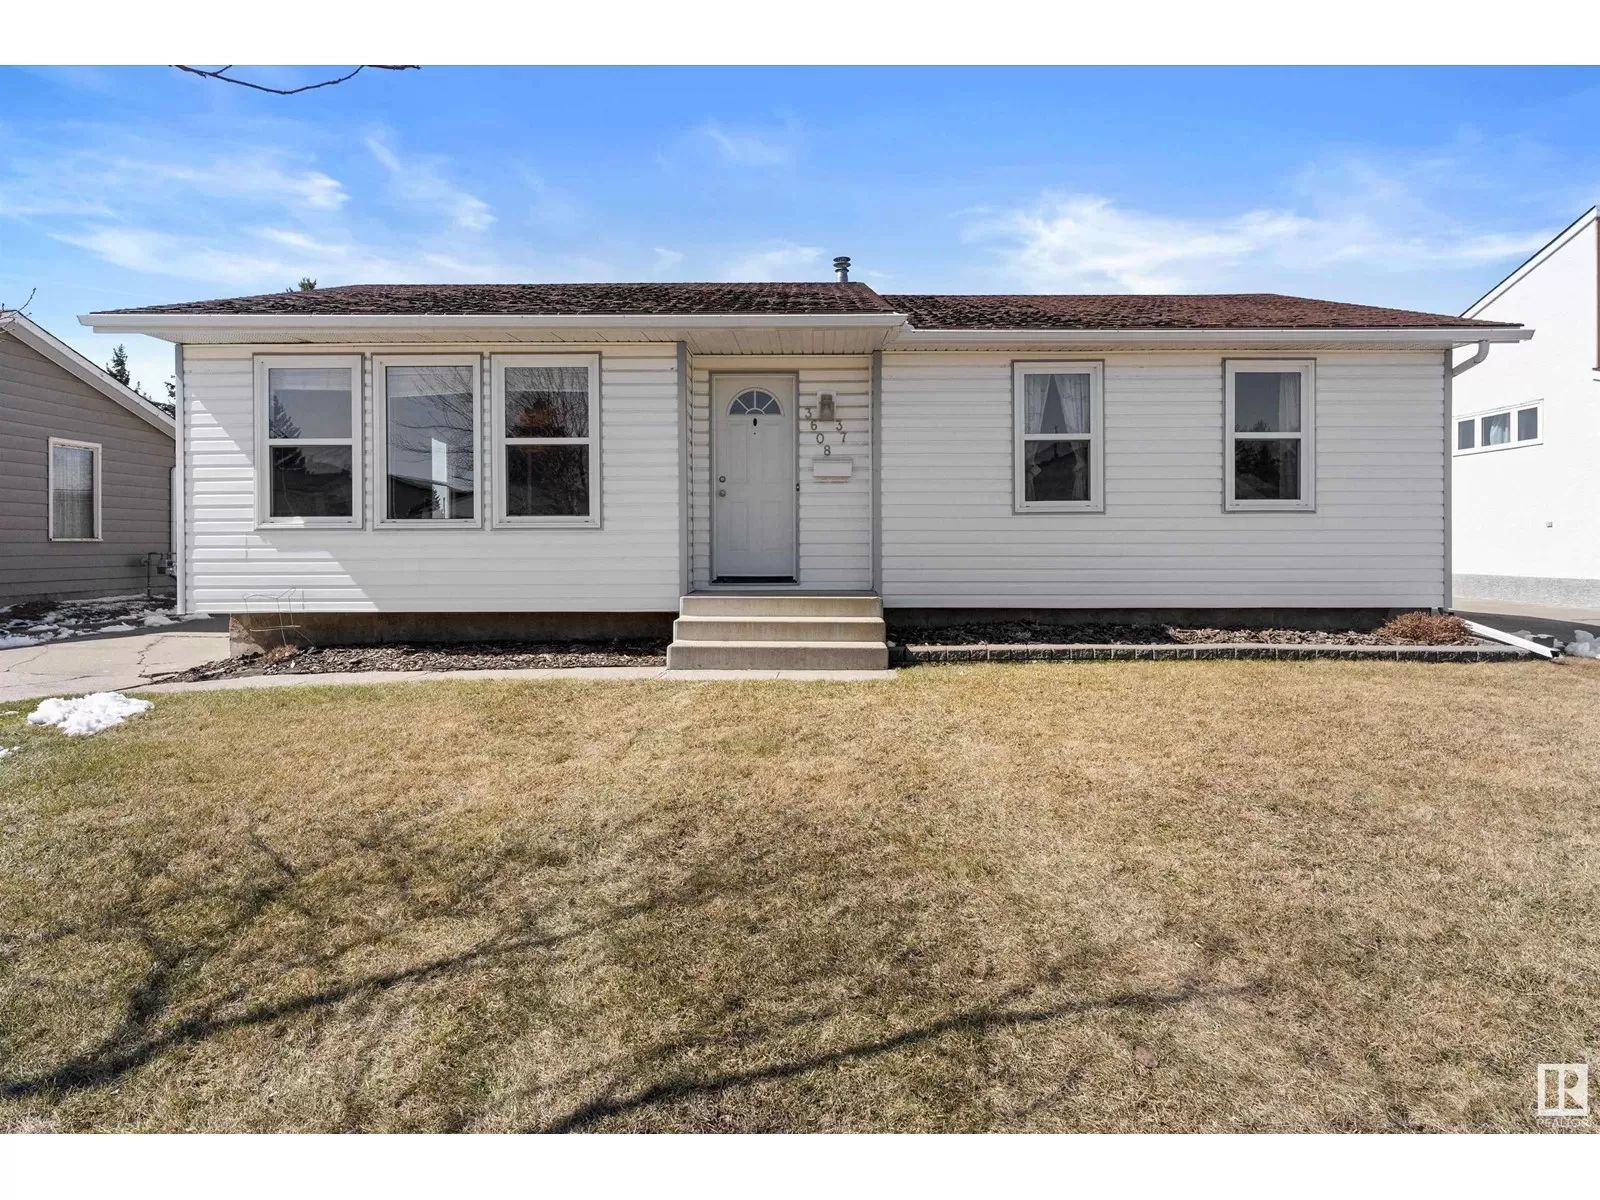 House for rent: 3608 37 St, Leduc, Alberta T9E 6G7